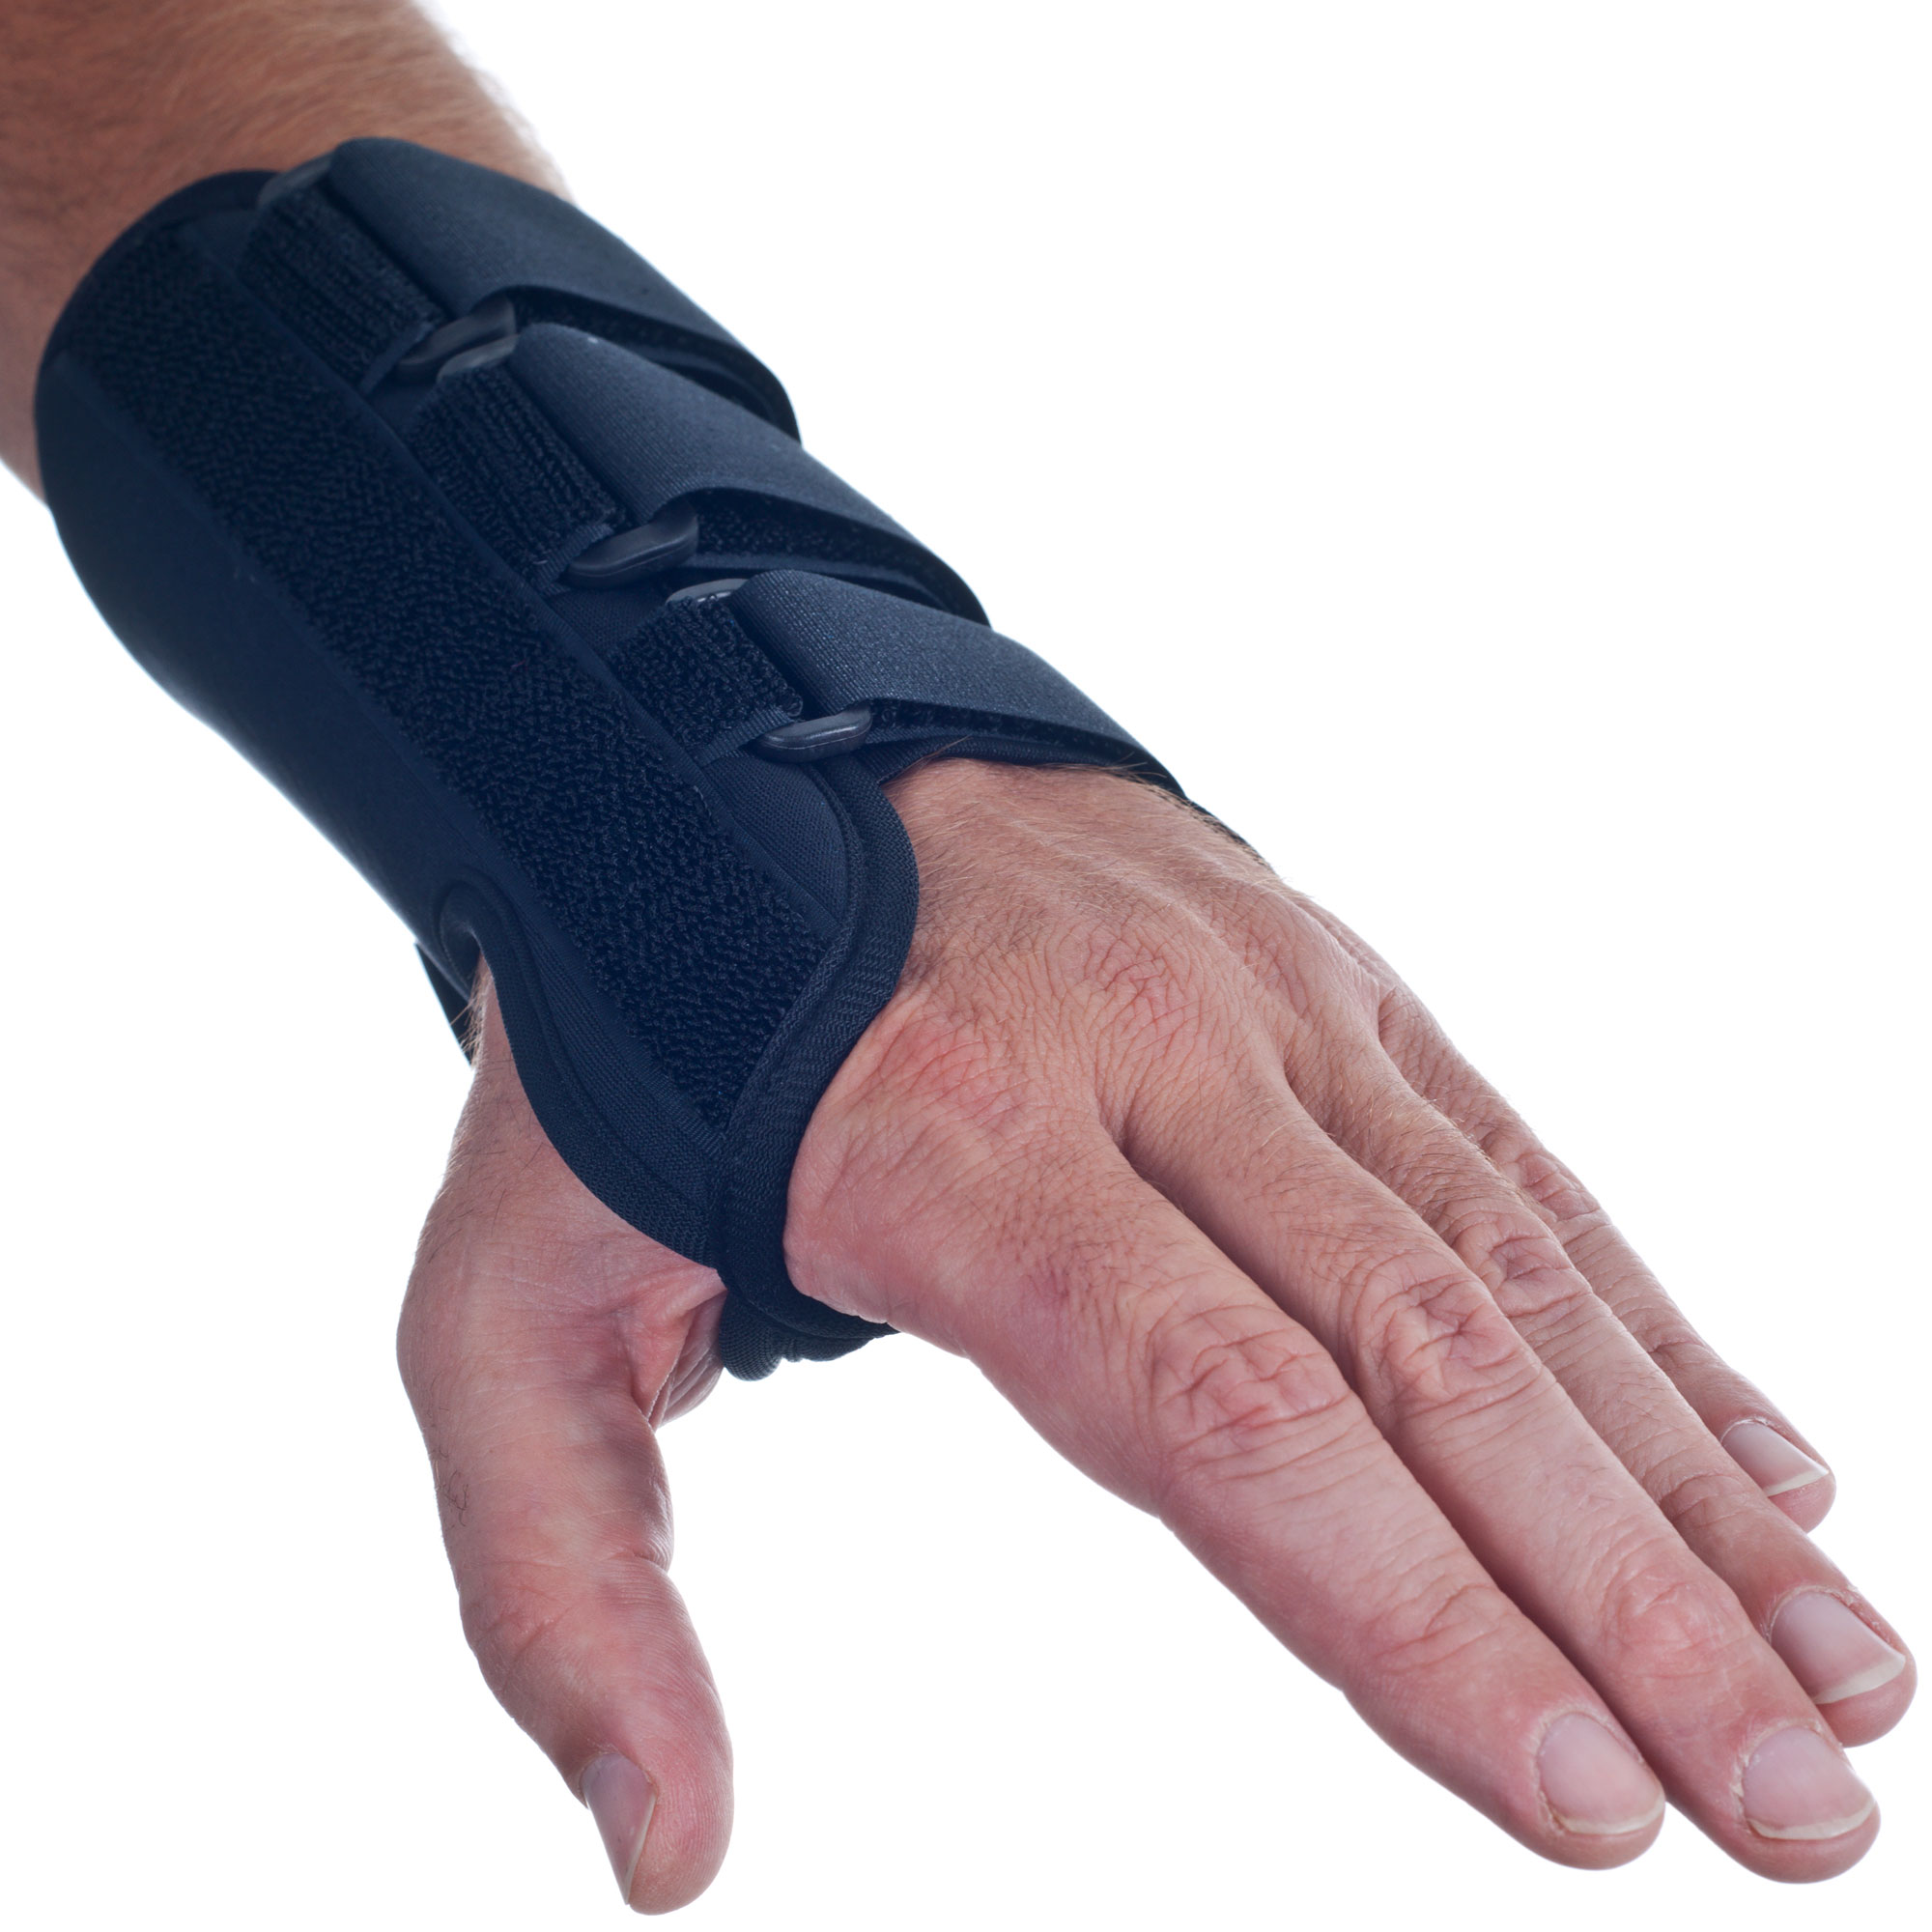 Remedy Breathable Neoprene Wrist Brace - Large Right